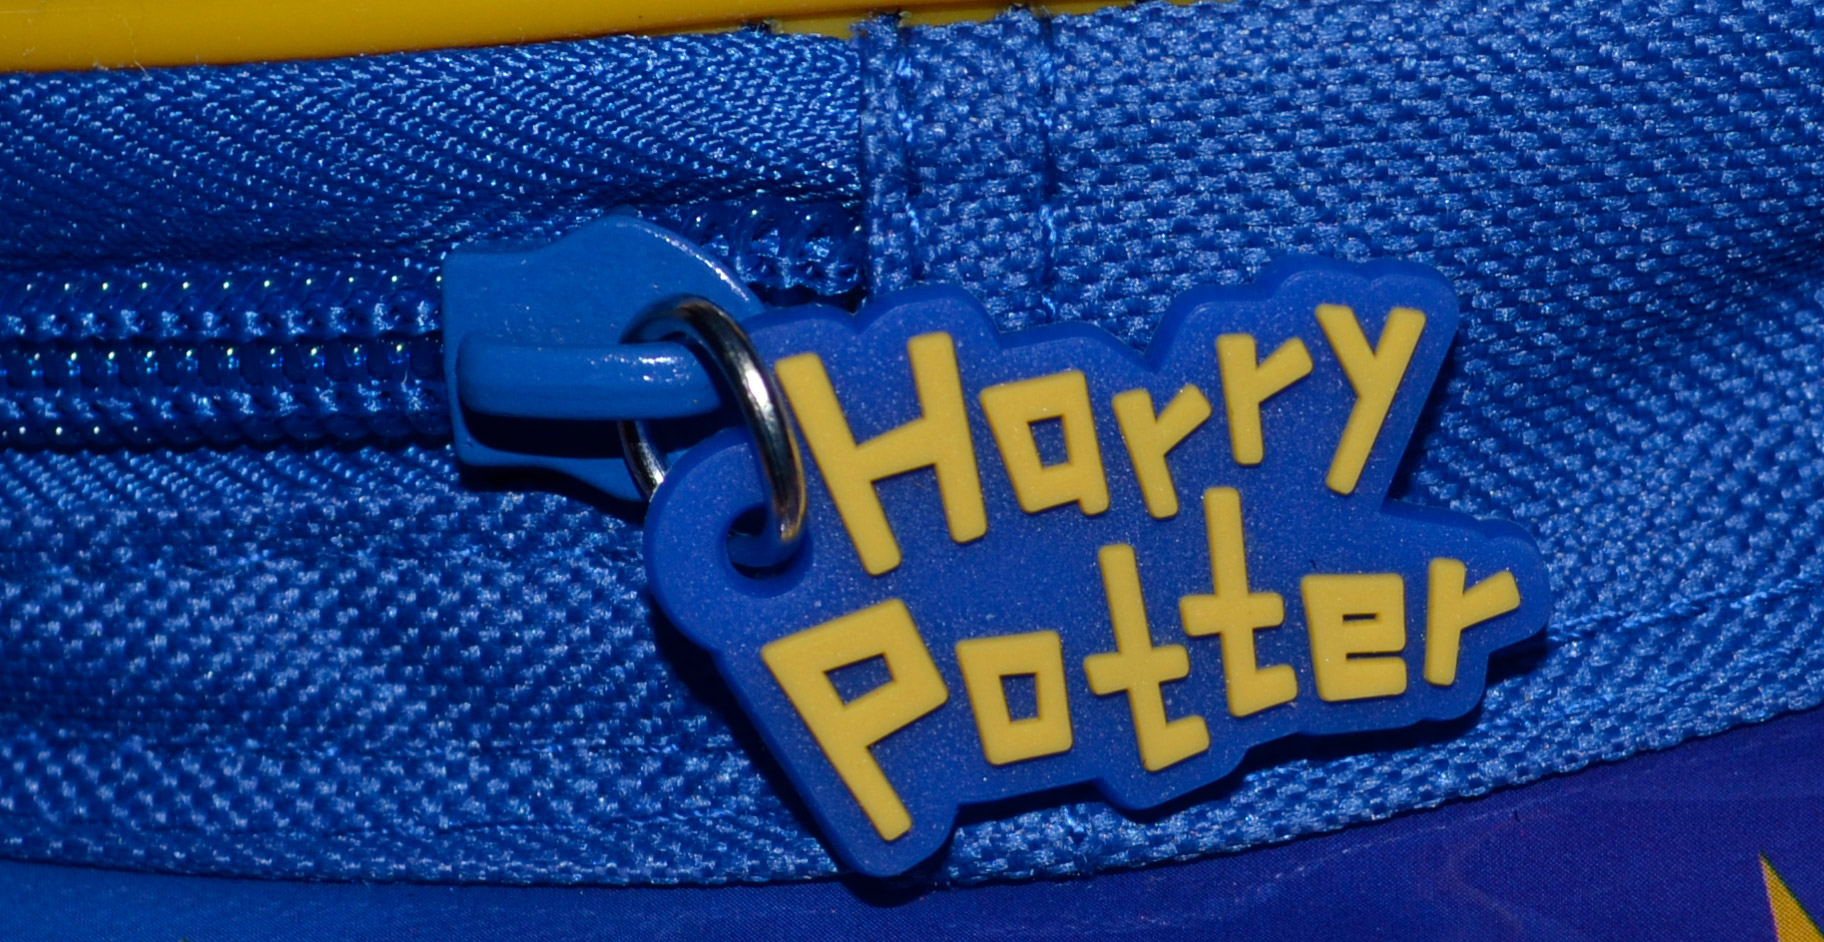 Harry Potter Charm School Bag Rucksack Backpack